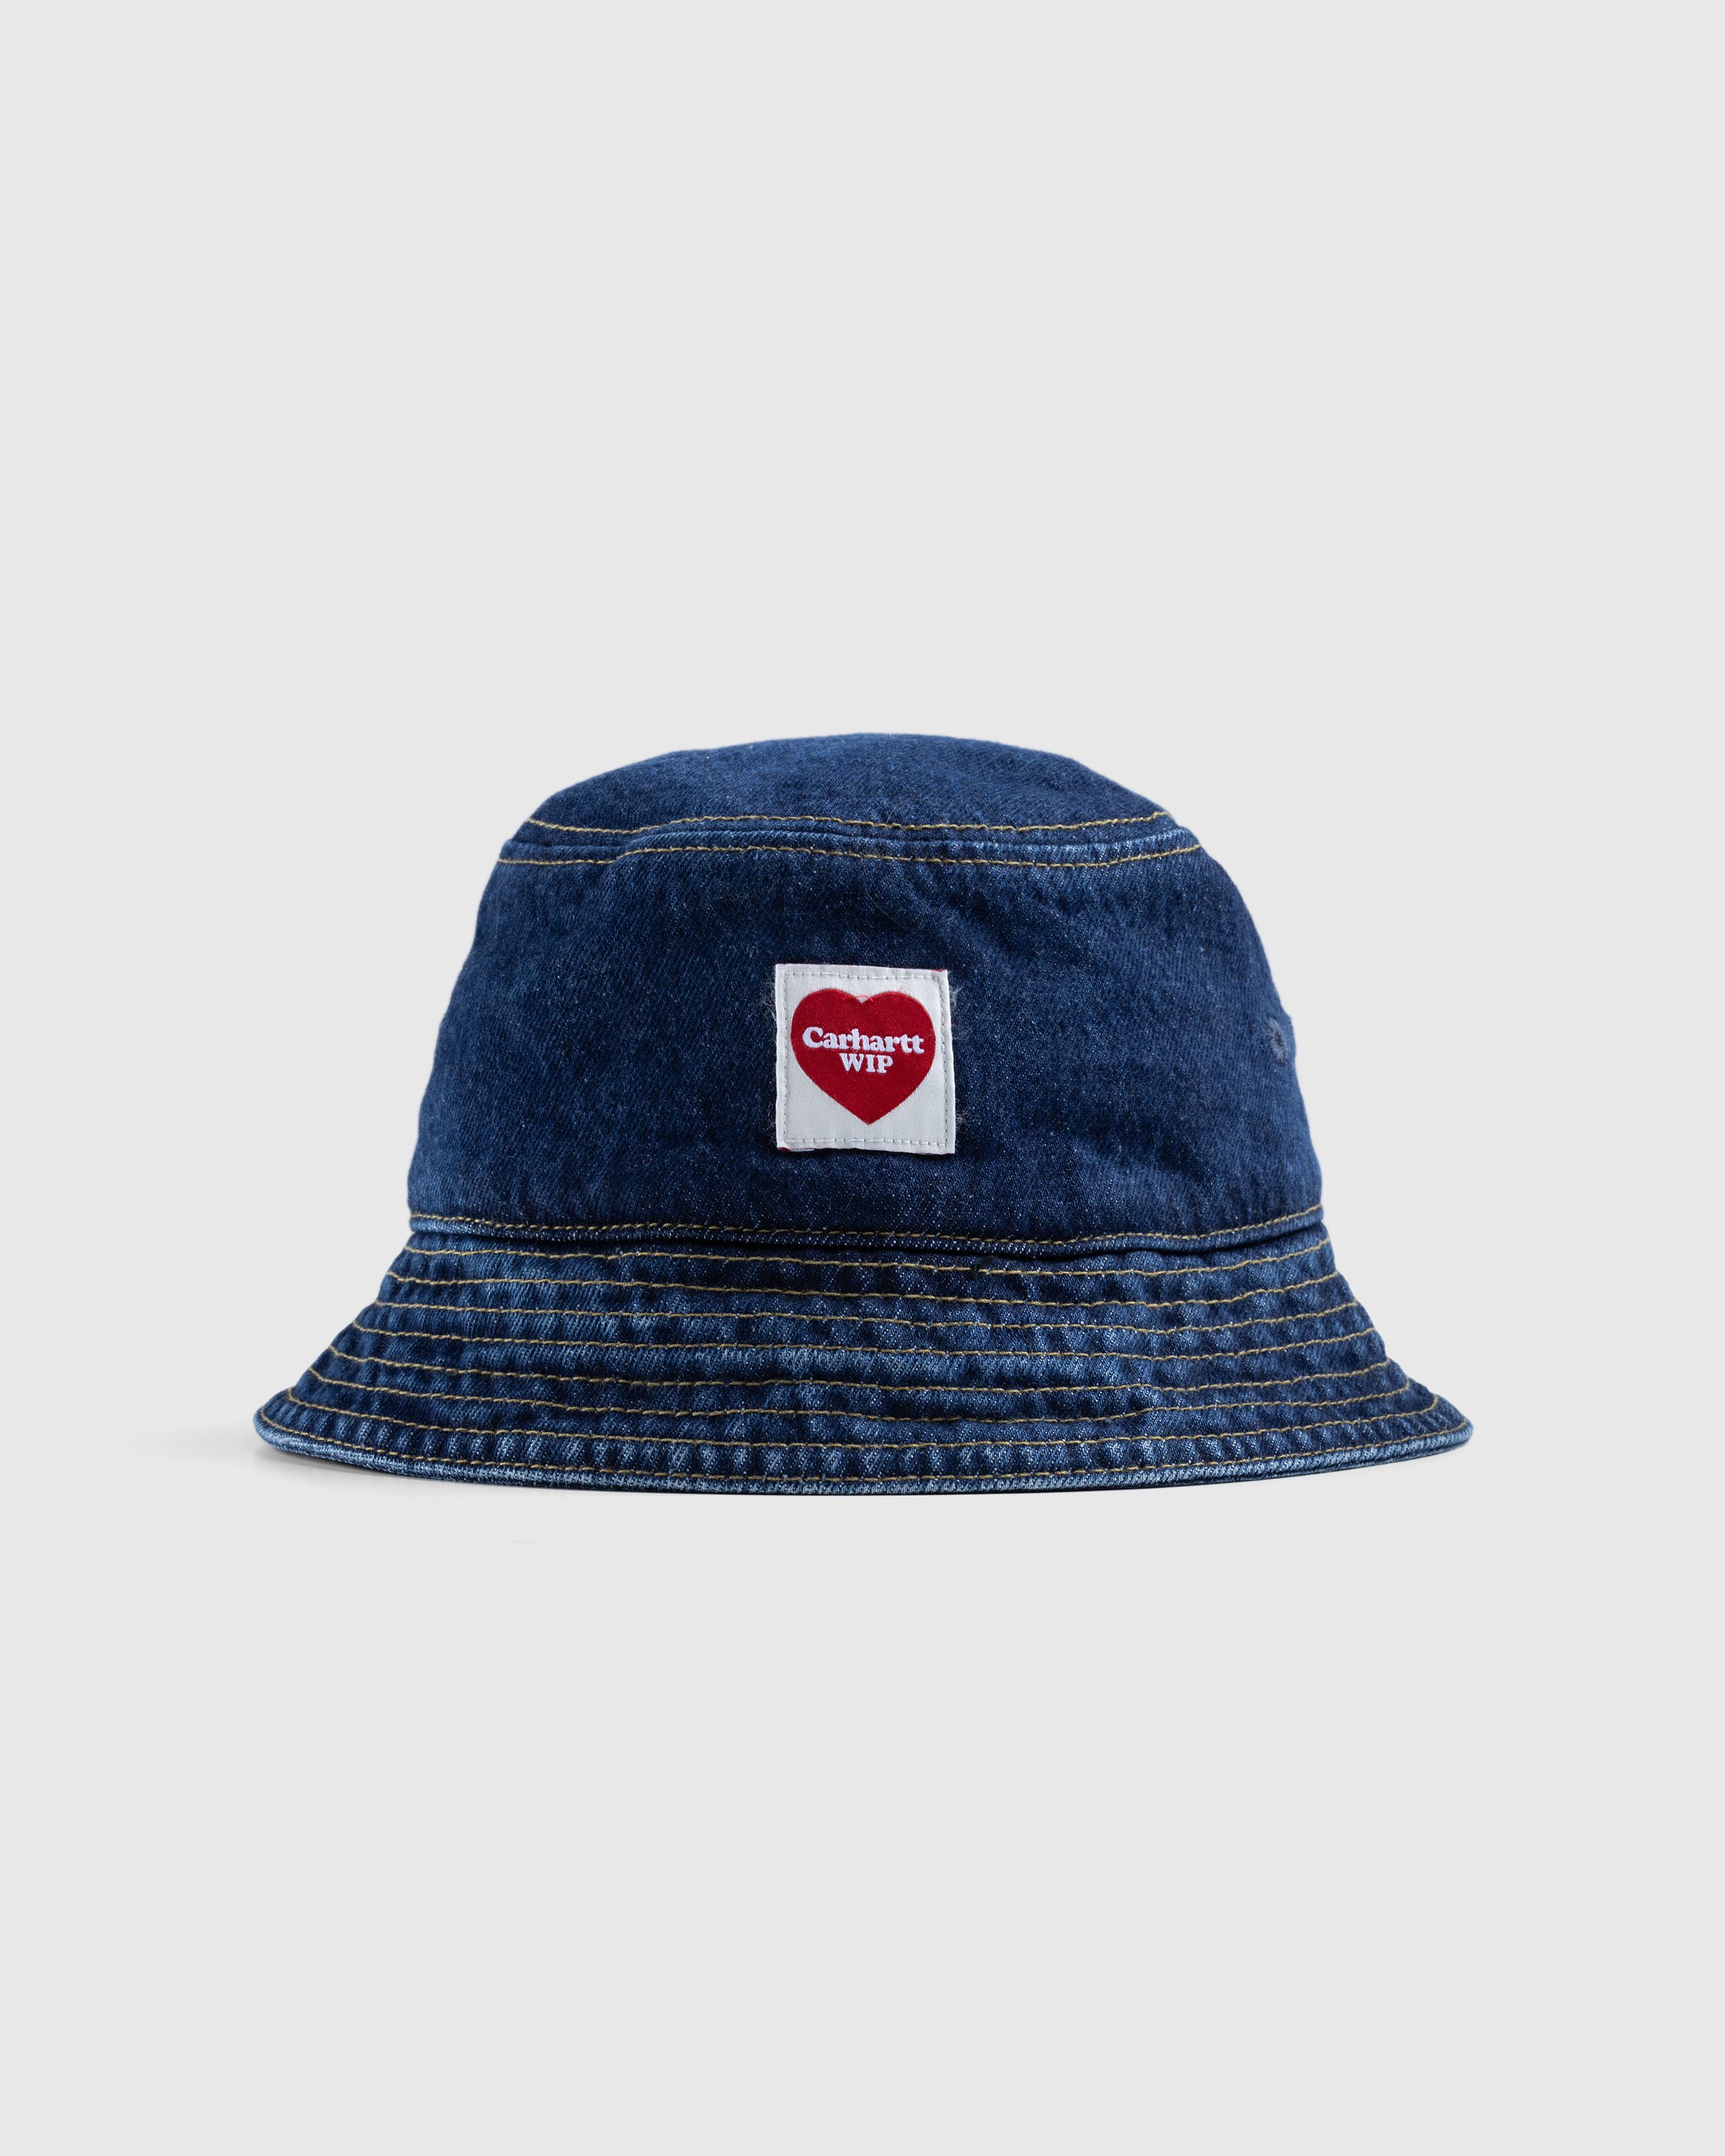 Carhartt WIP - Nash Bucket Hat Stonewashed Blue - Accessories - Blue - Image 1